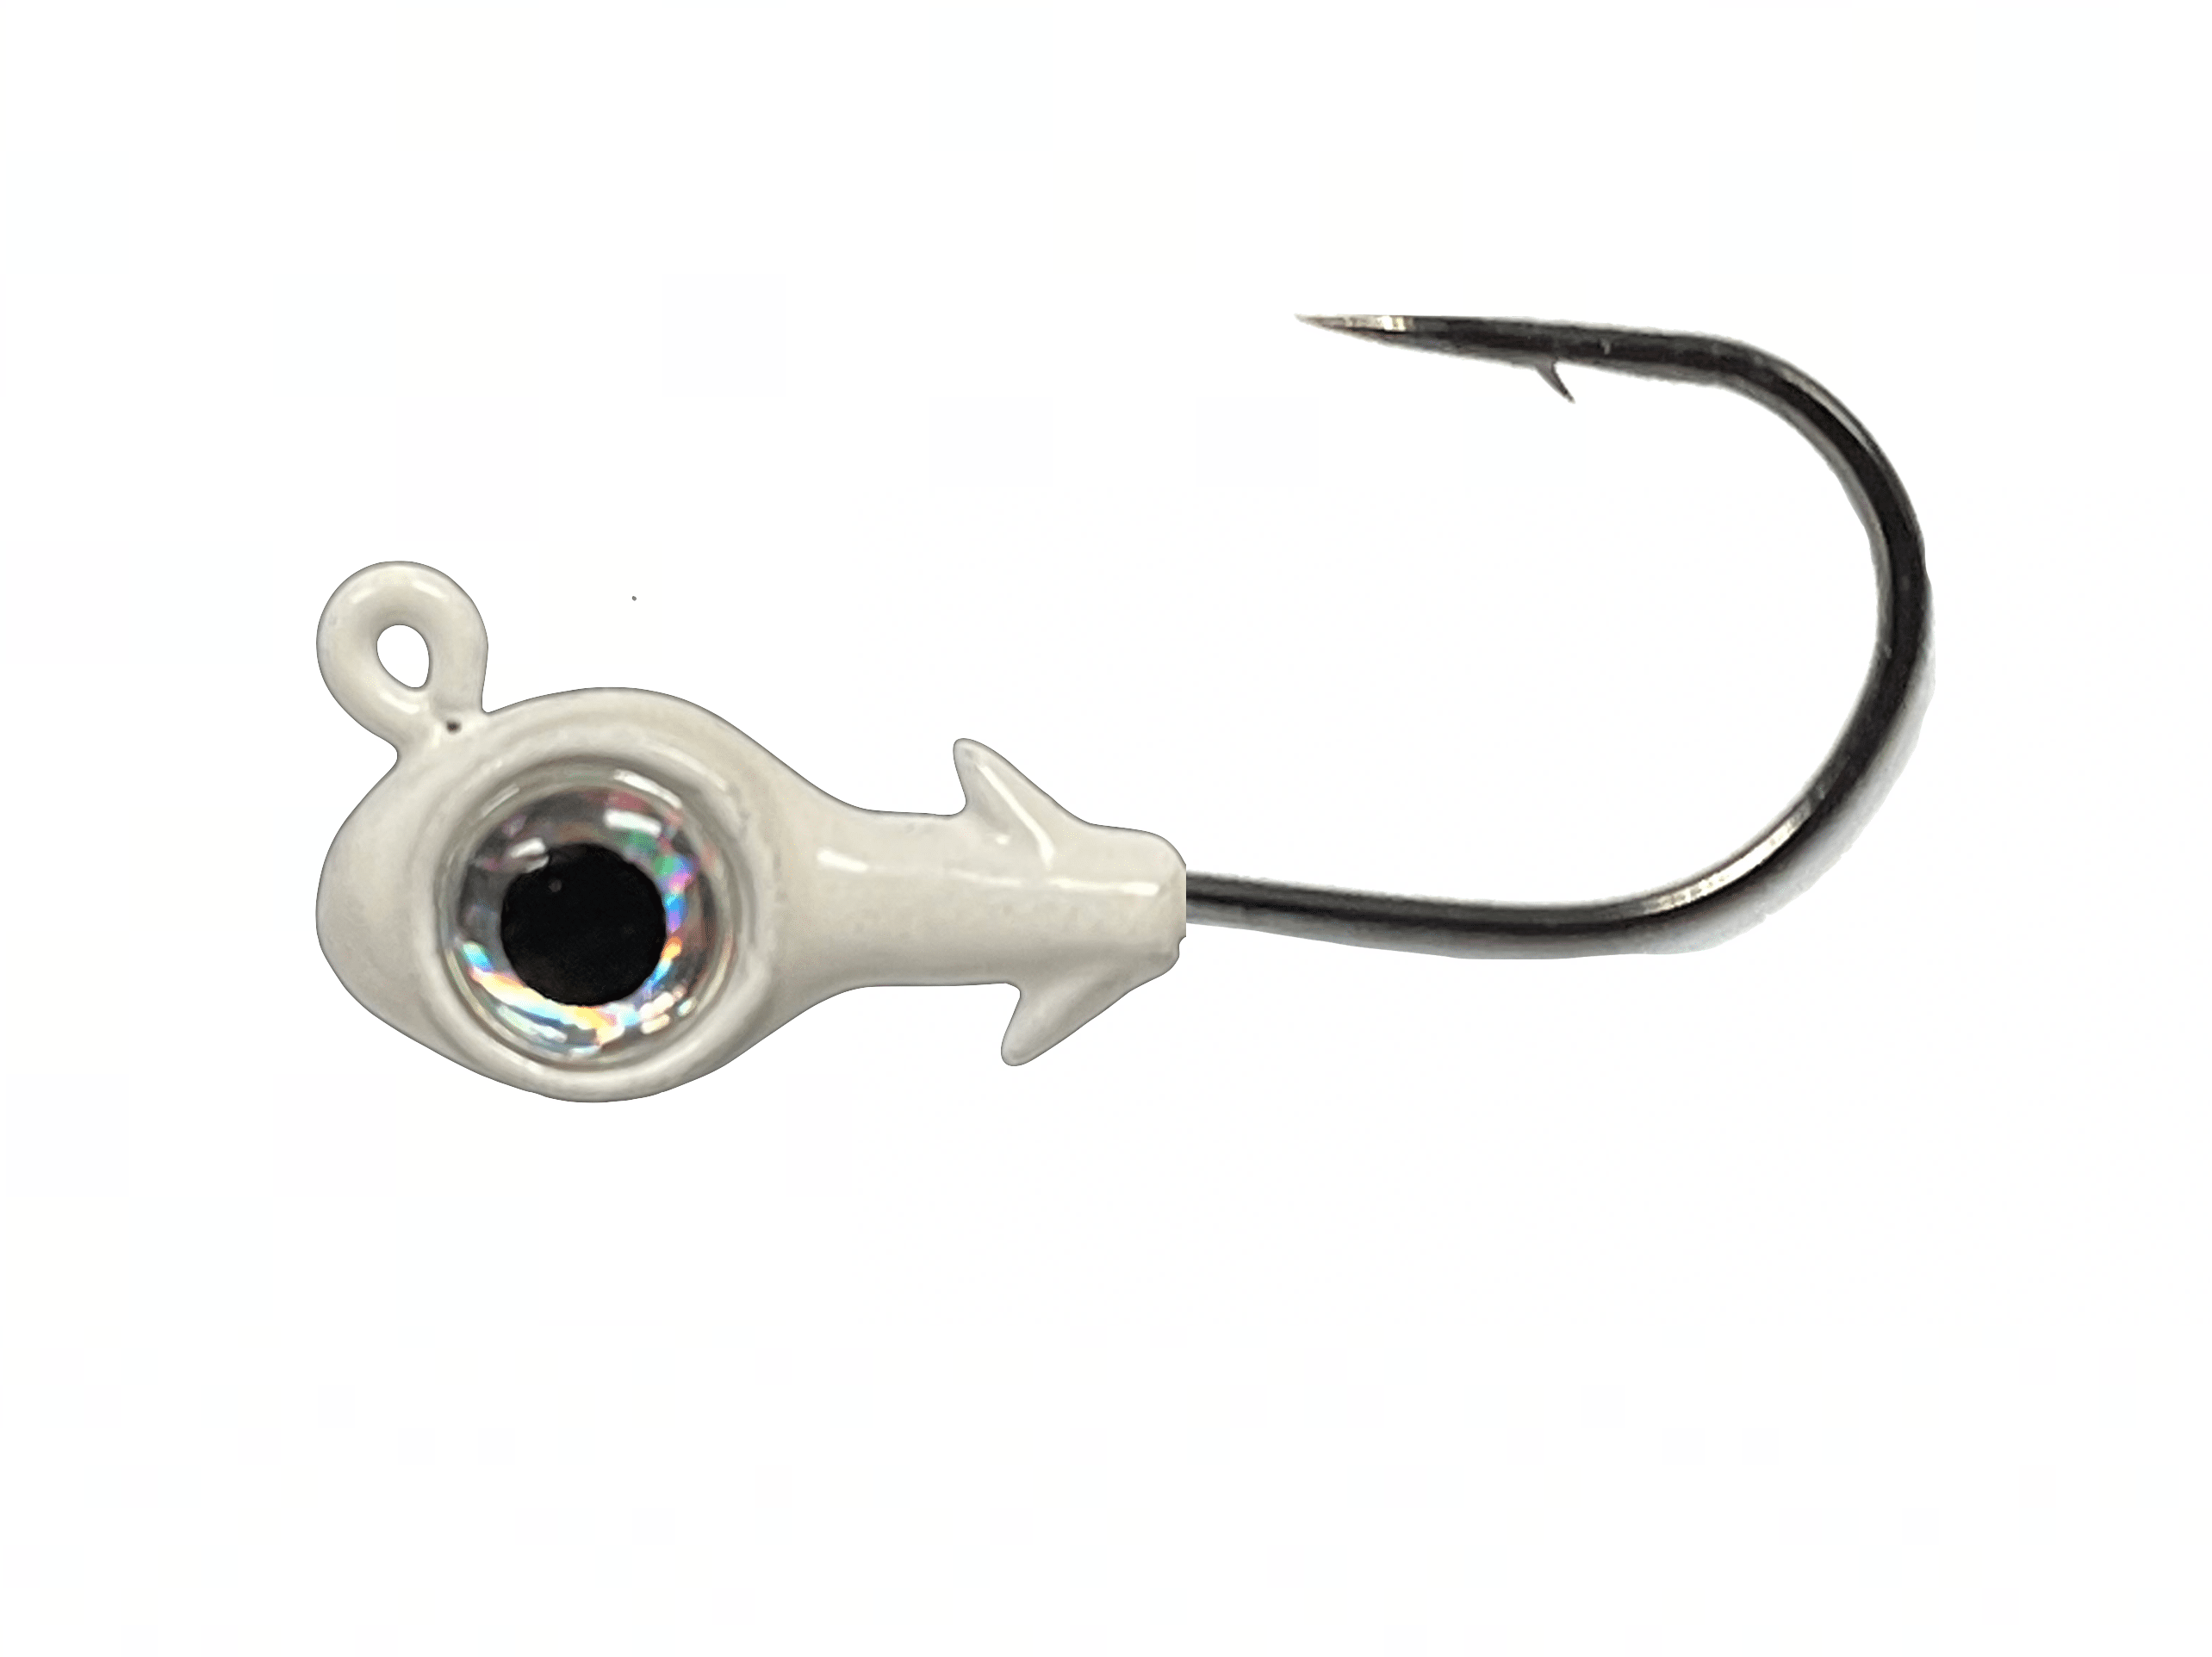 Big Eye Jig Heads– Hunting and Fishing Depot